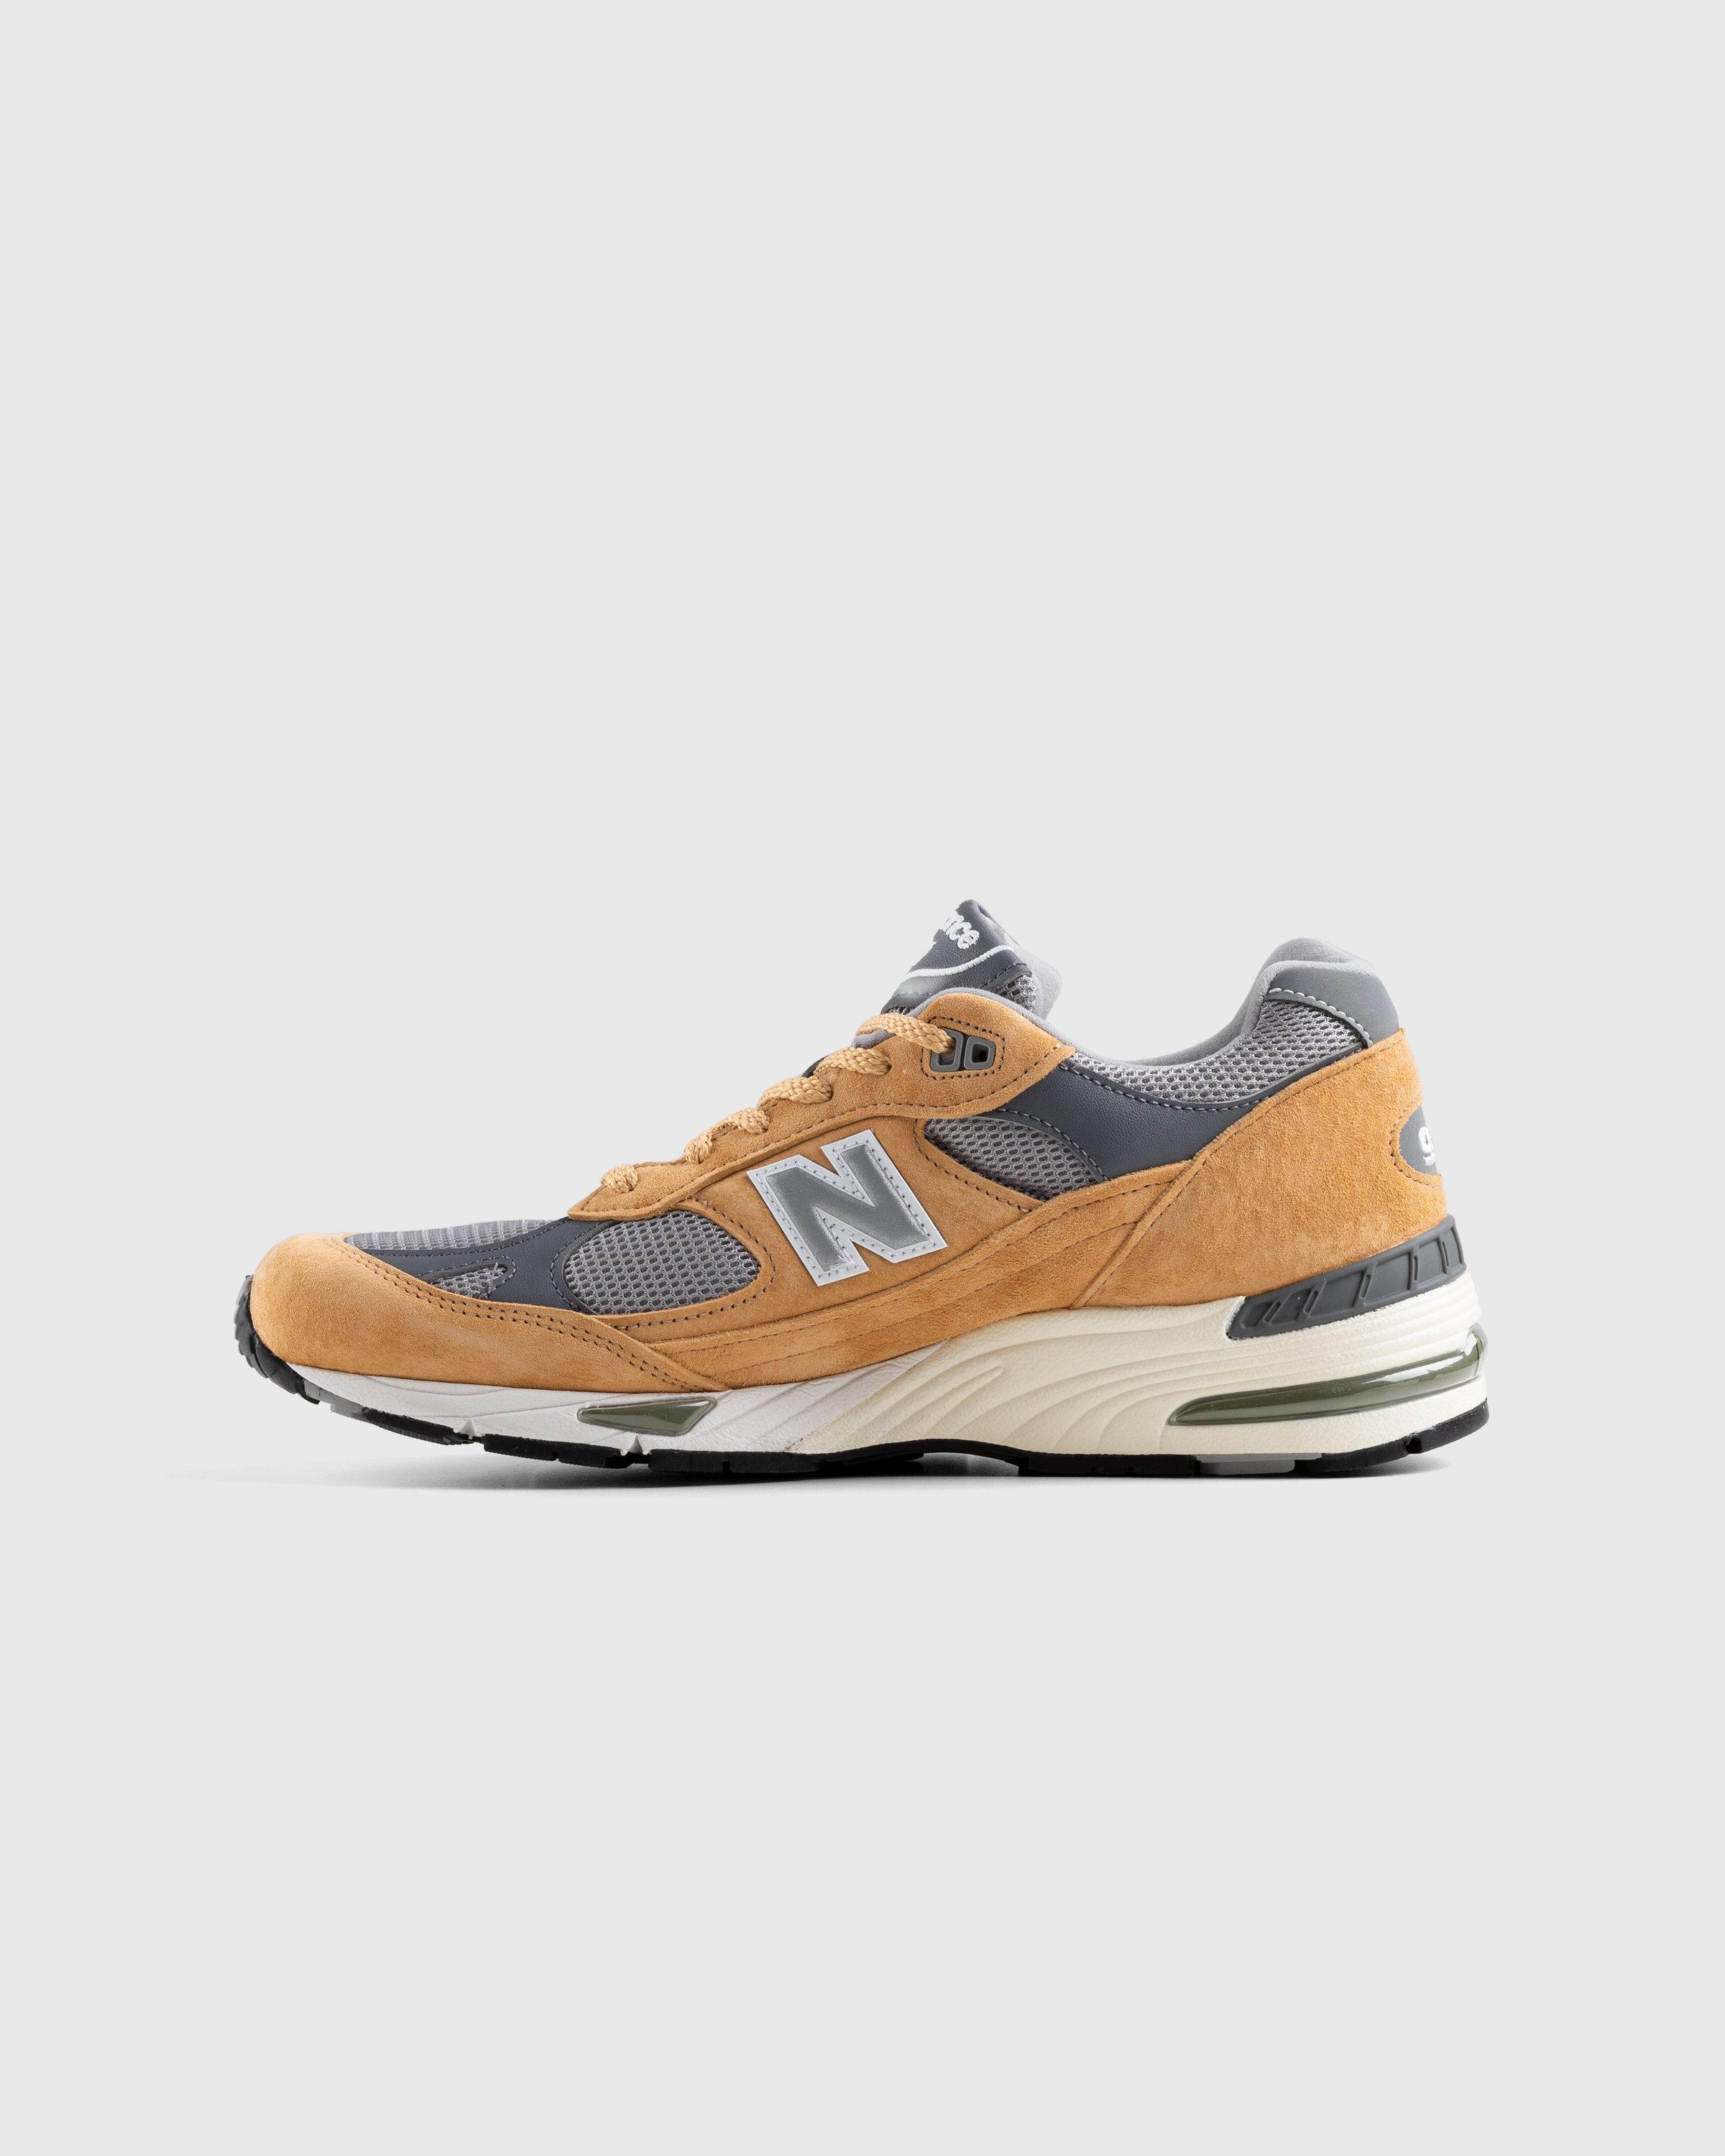 New Balance - M991TGG Tan/Grey - Footwear - Brown - Image 2